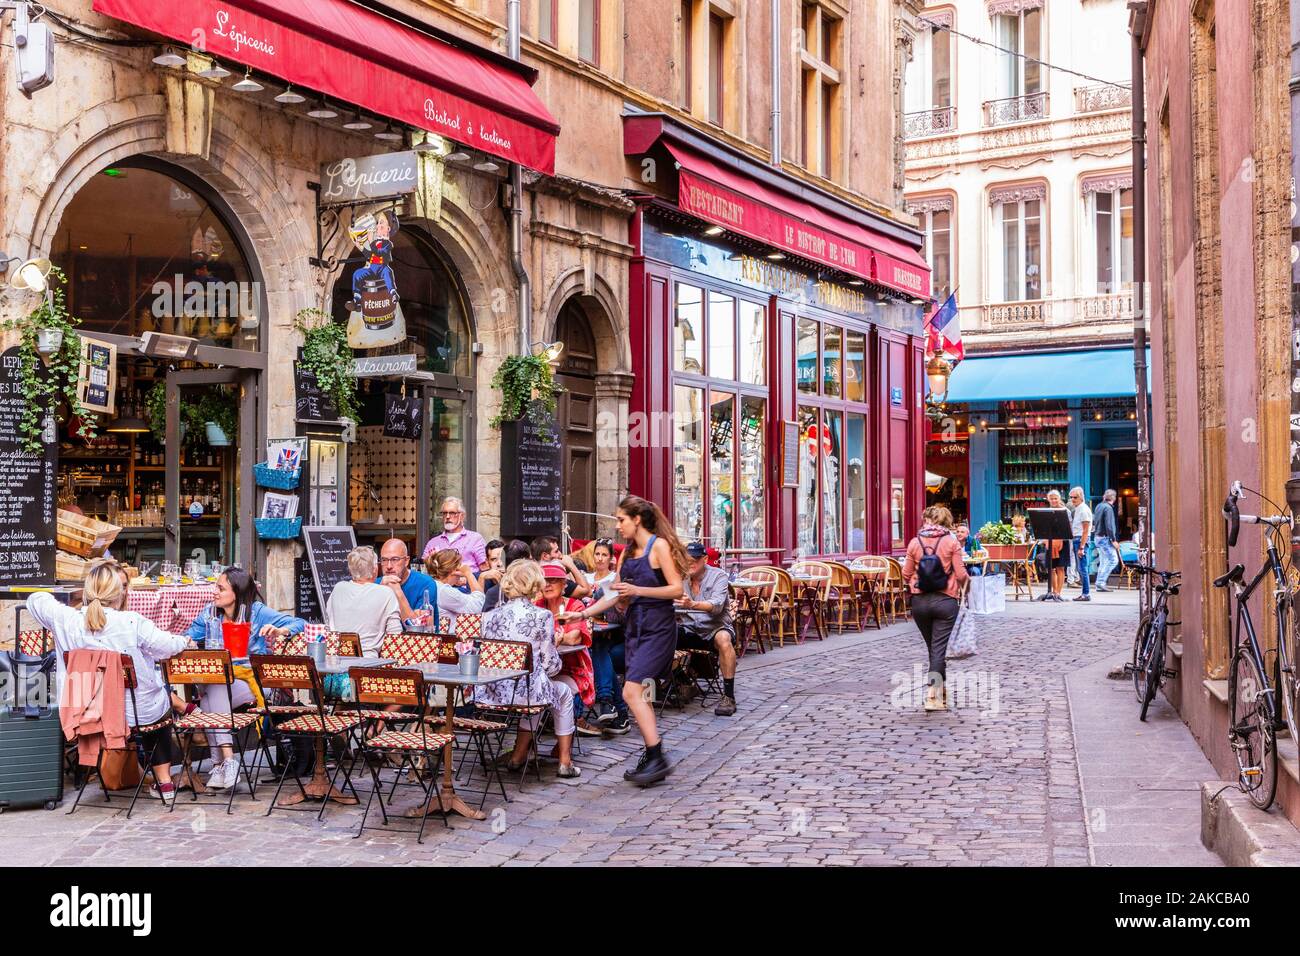 Francia, Ródano, Lyon, Vieux Lyon, sitio histórico catalogado como Patrimonio Mundial por la UNESCO, Bouchon tradicional restaurante, terraza del restaurante calle de La Monnaie Foto de stock